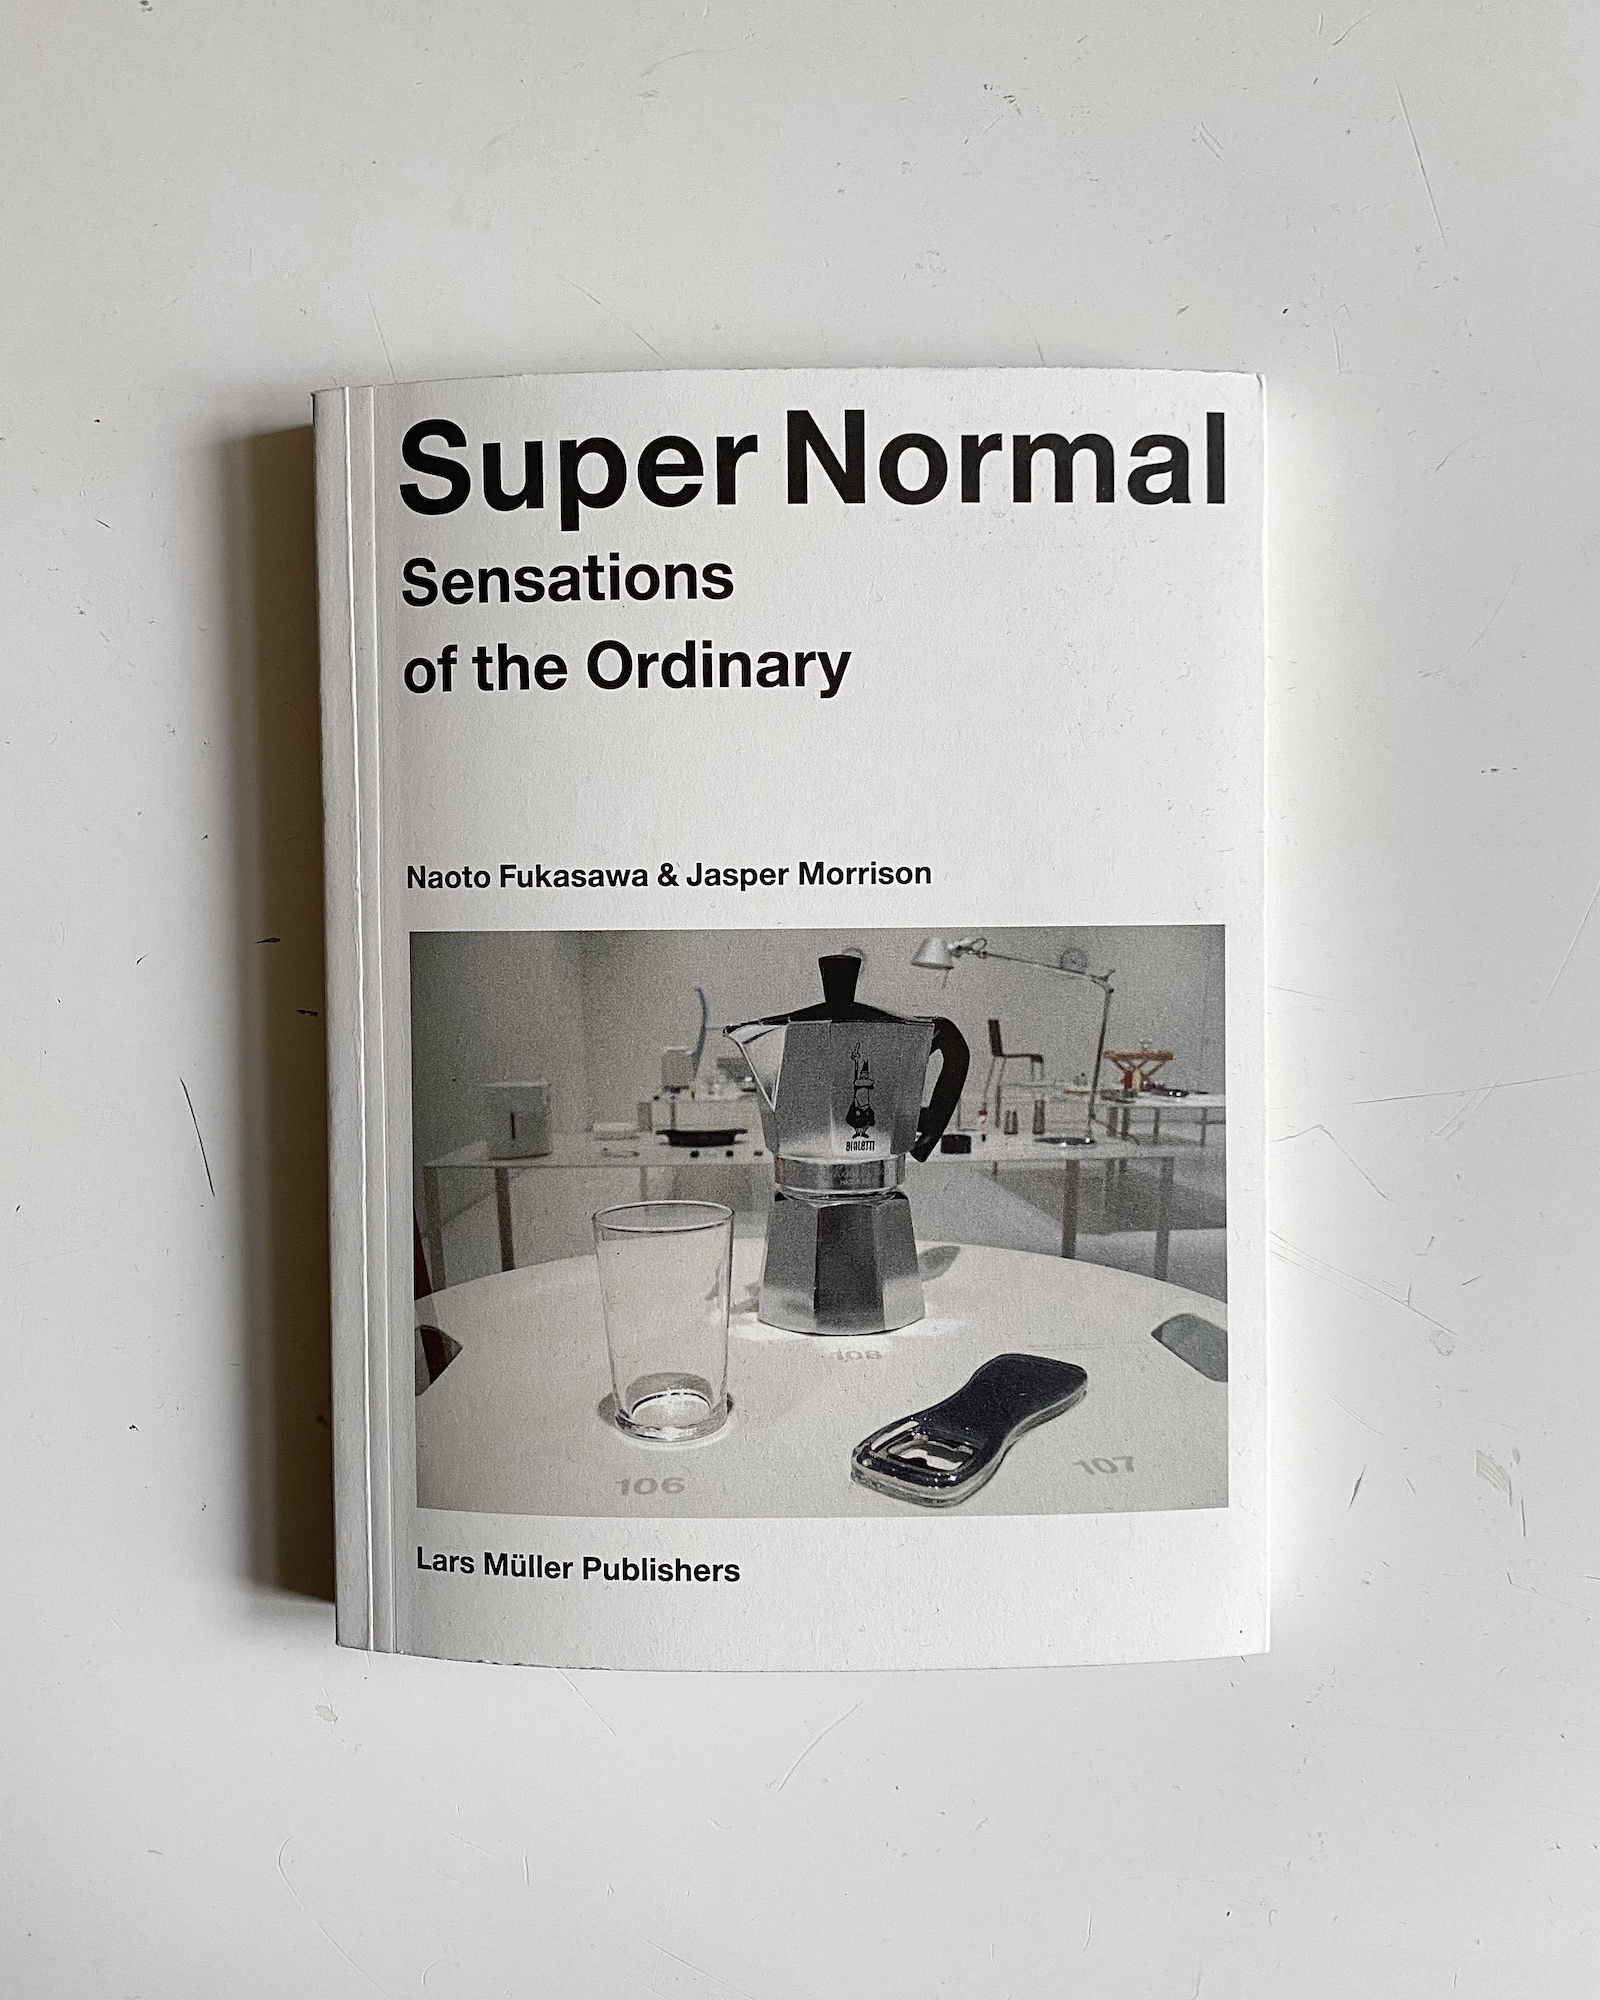 "Super Normal. Sensations of the Ordinary" cover by Naoto Fukasawa and Jasper Morrison